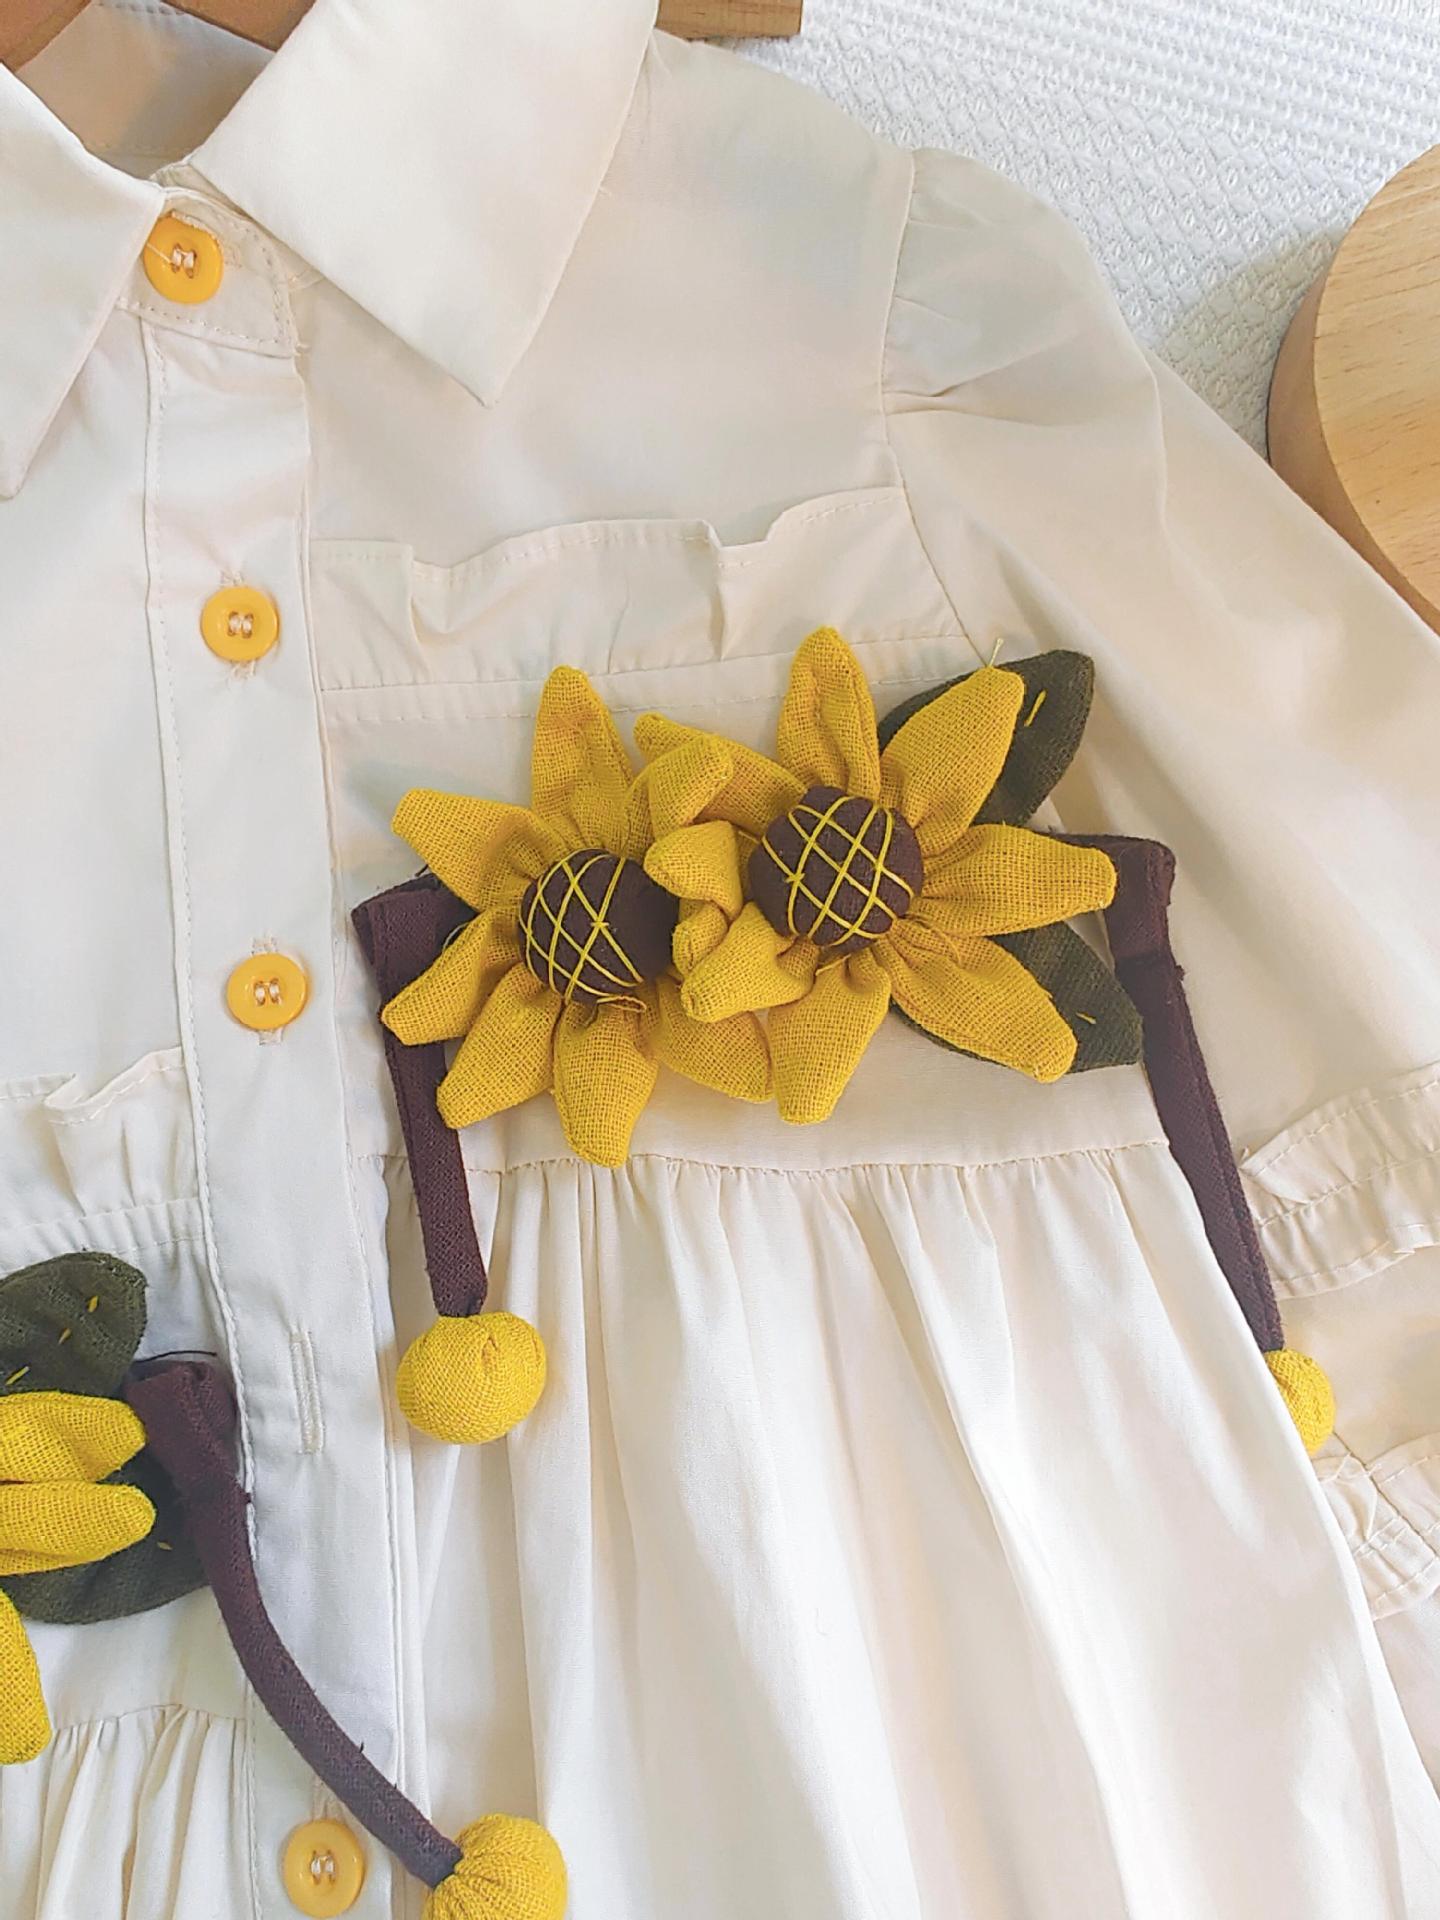 [363720] - Baju Outer Dress Lengan Panjang Fashion Import Anak Perempuan - Motif Sunflower